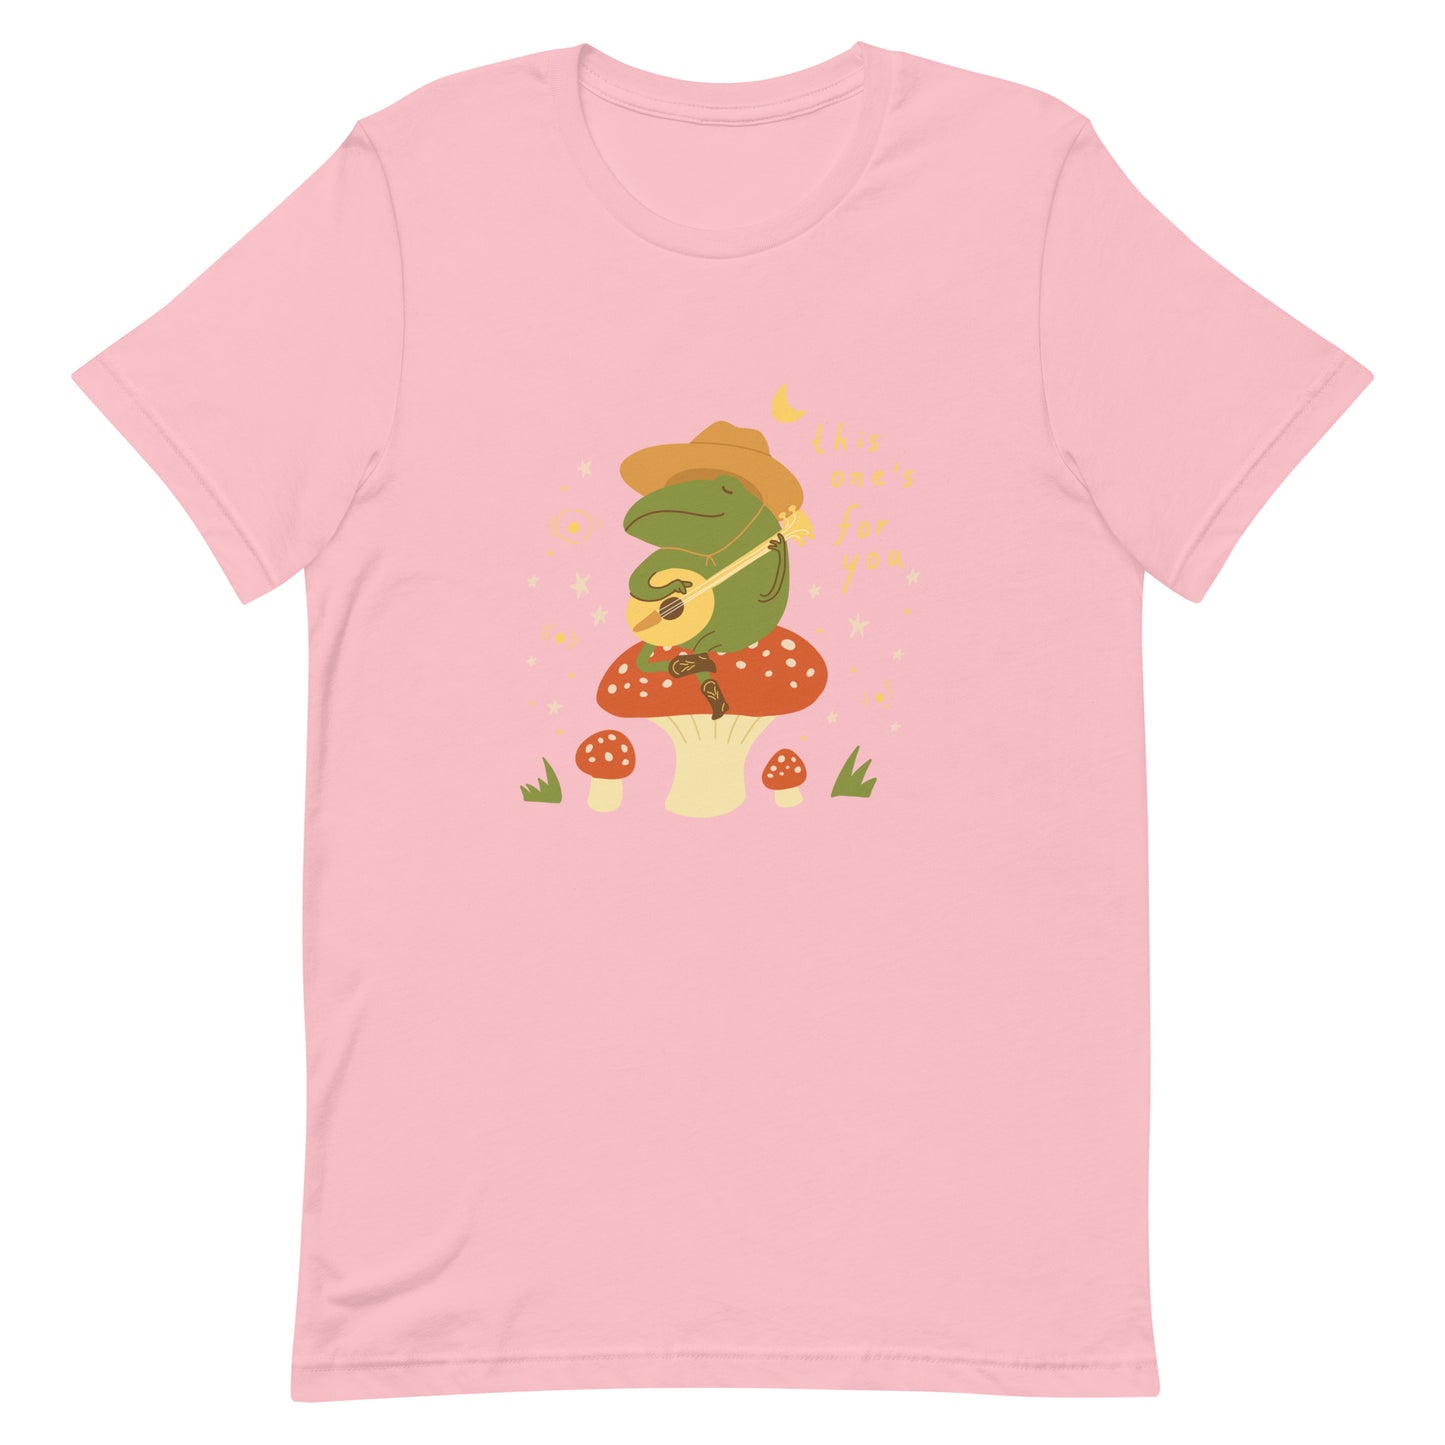 Singing Frog on a Mushroom Unisex t-shirt XS - 5XL